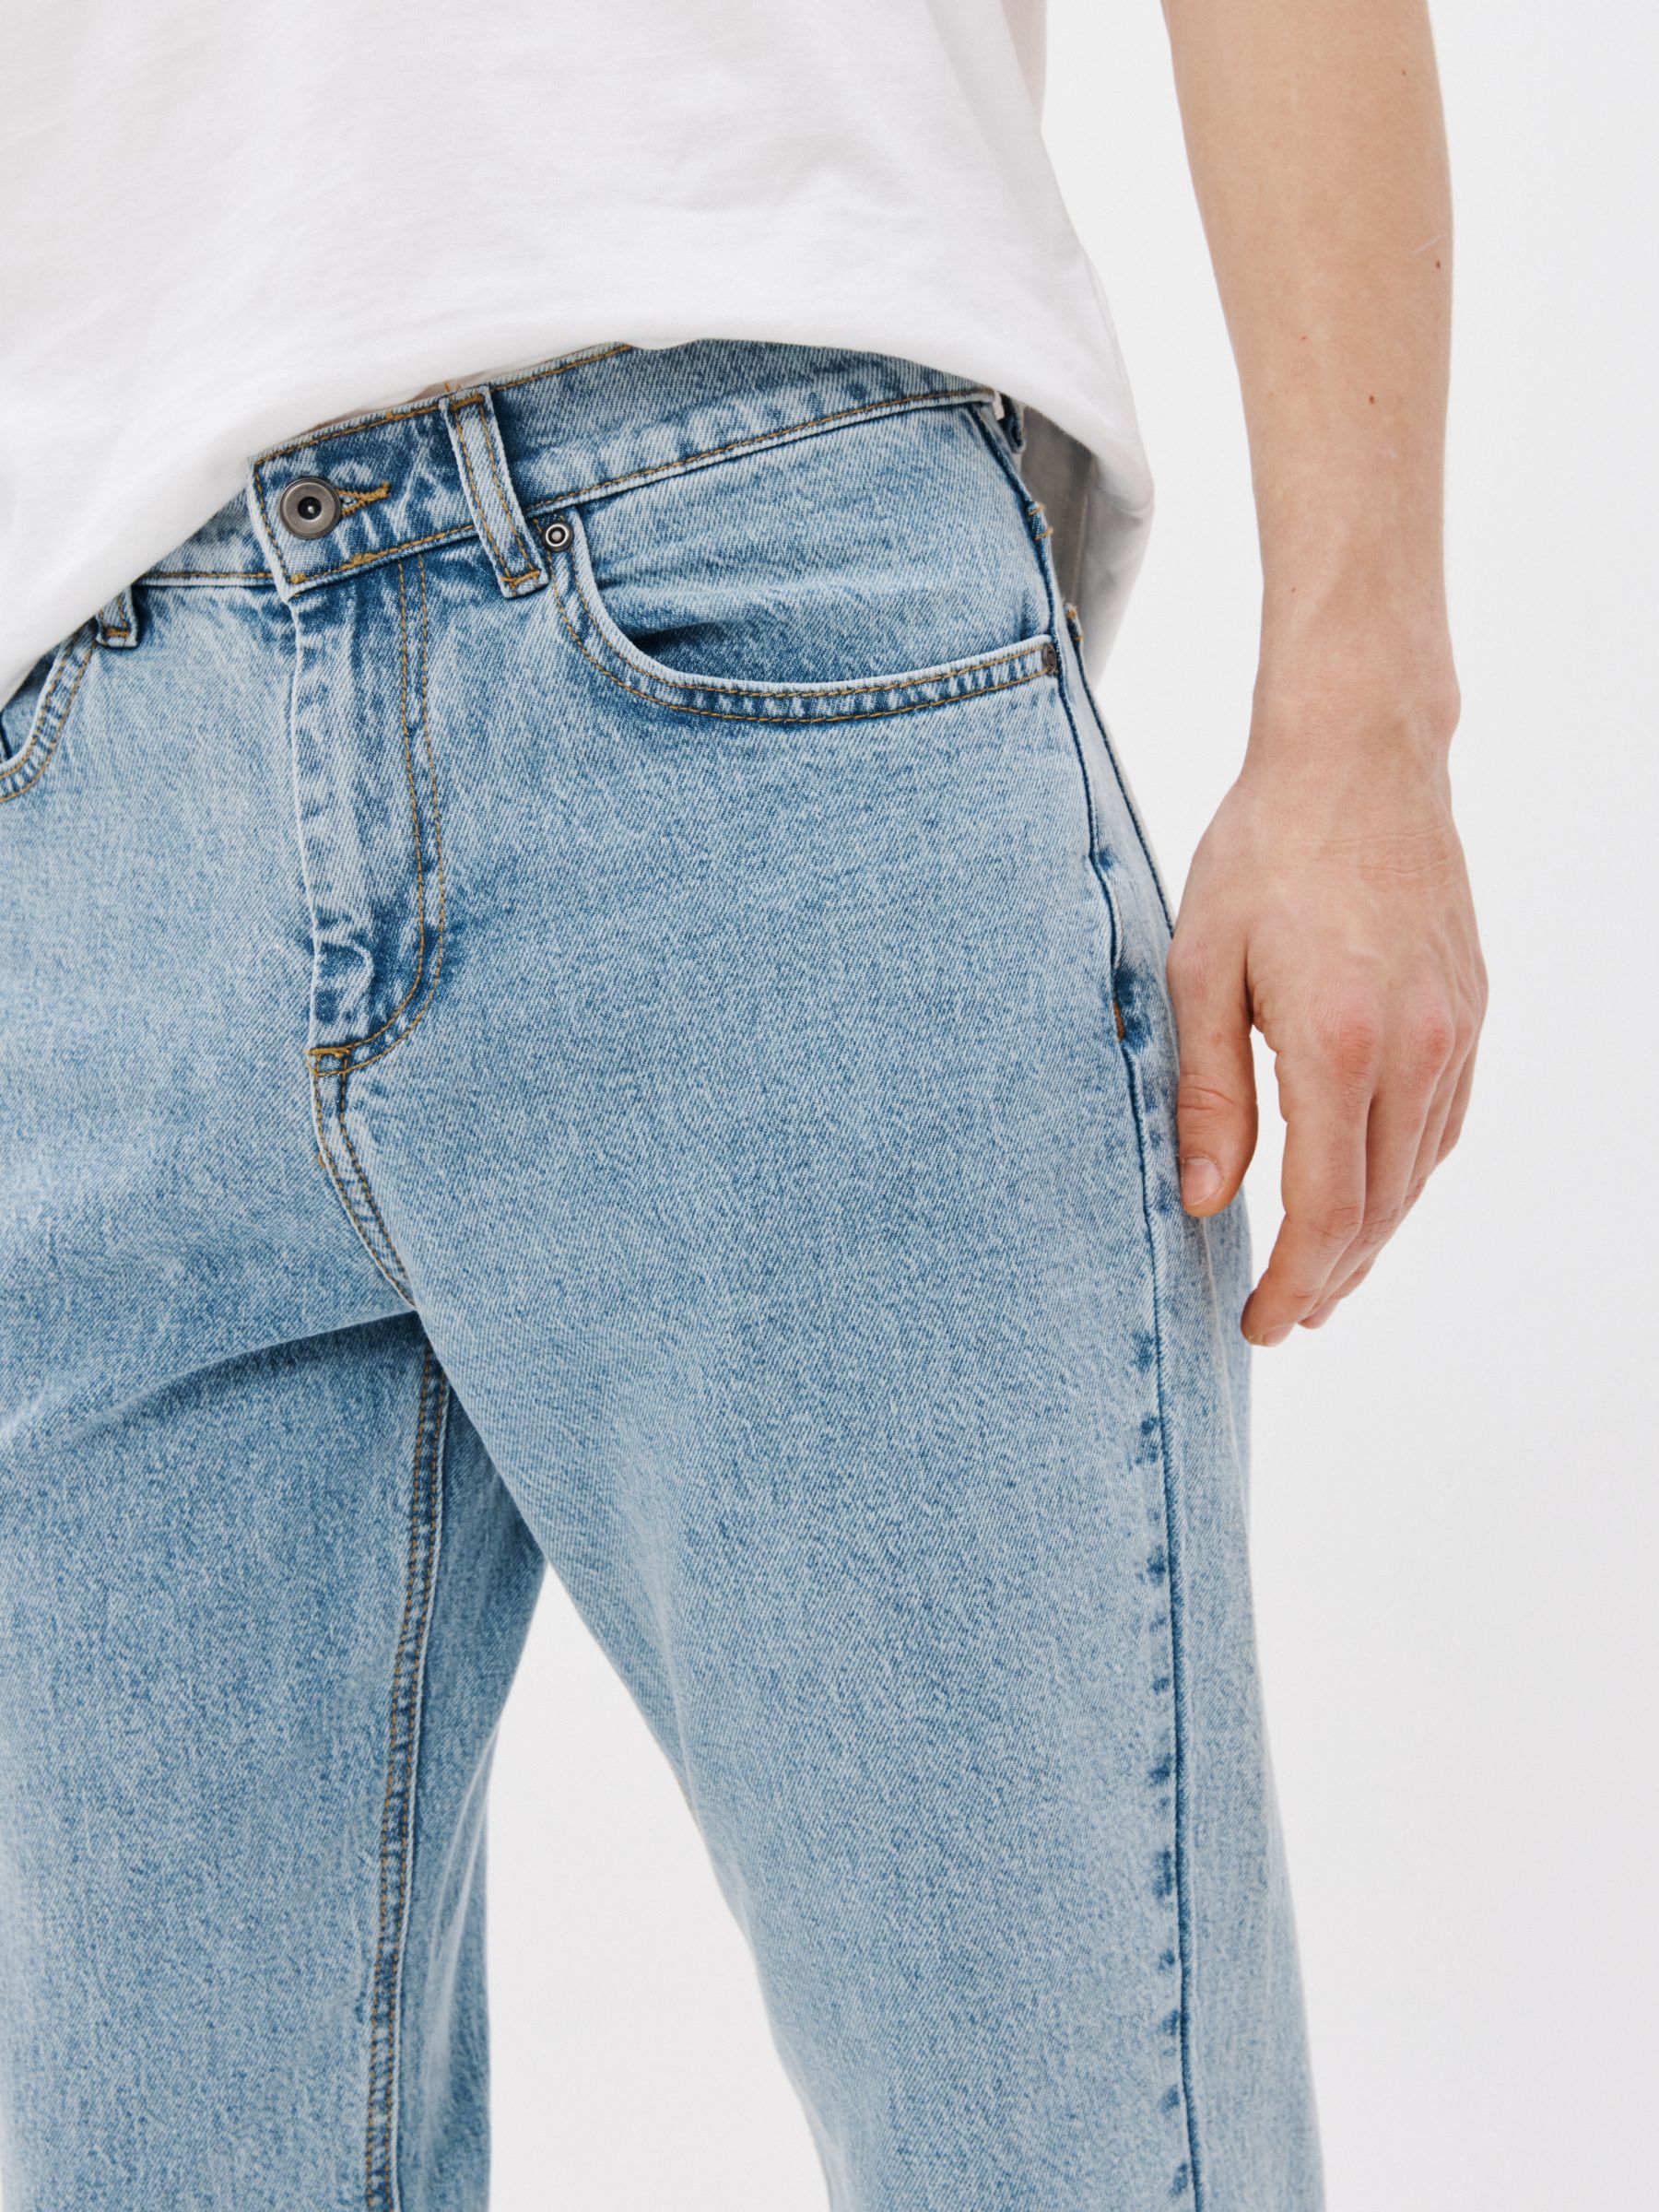 John Lewis ANYDAY Slim Fit Denim Jeans, Stone Wash at John Lewis & Partners